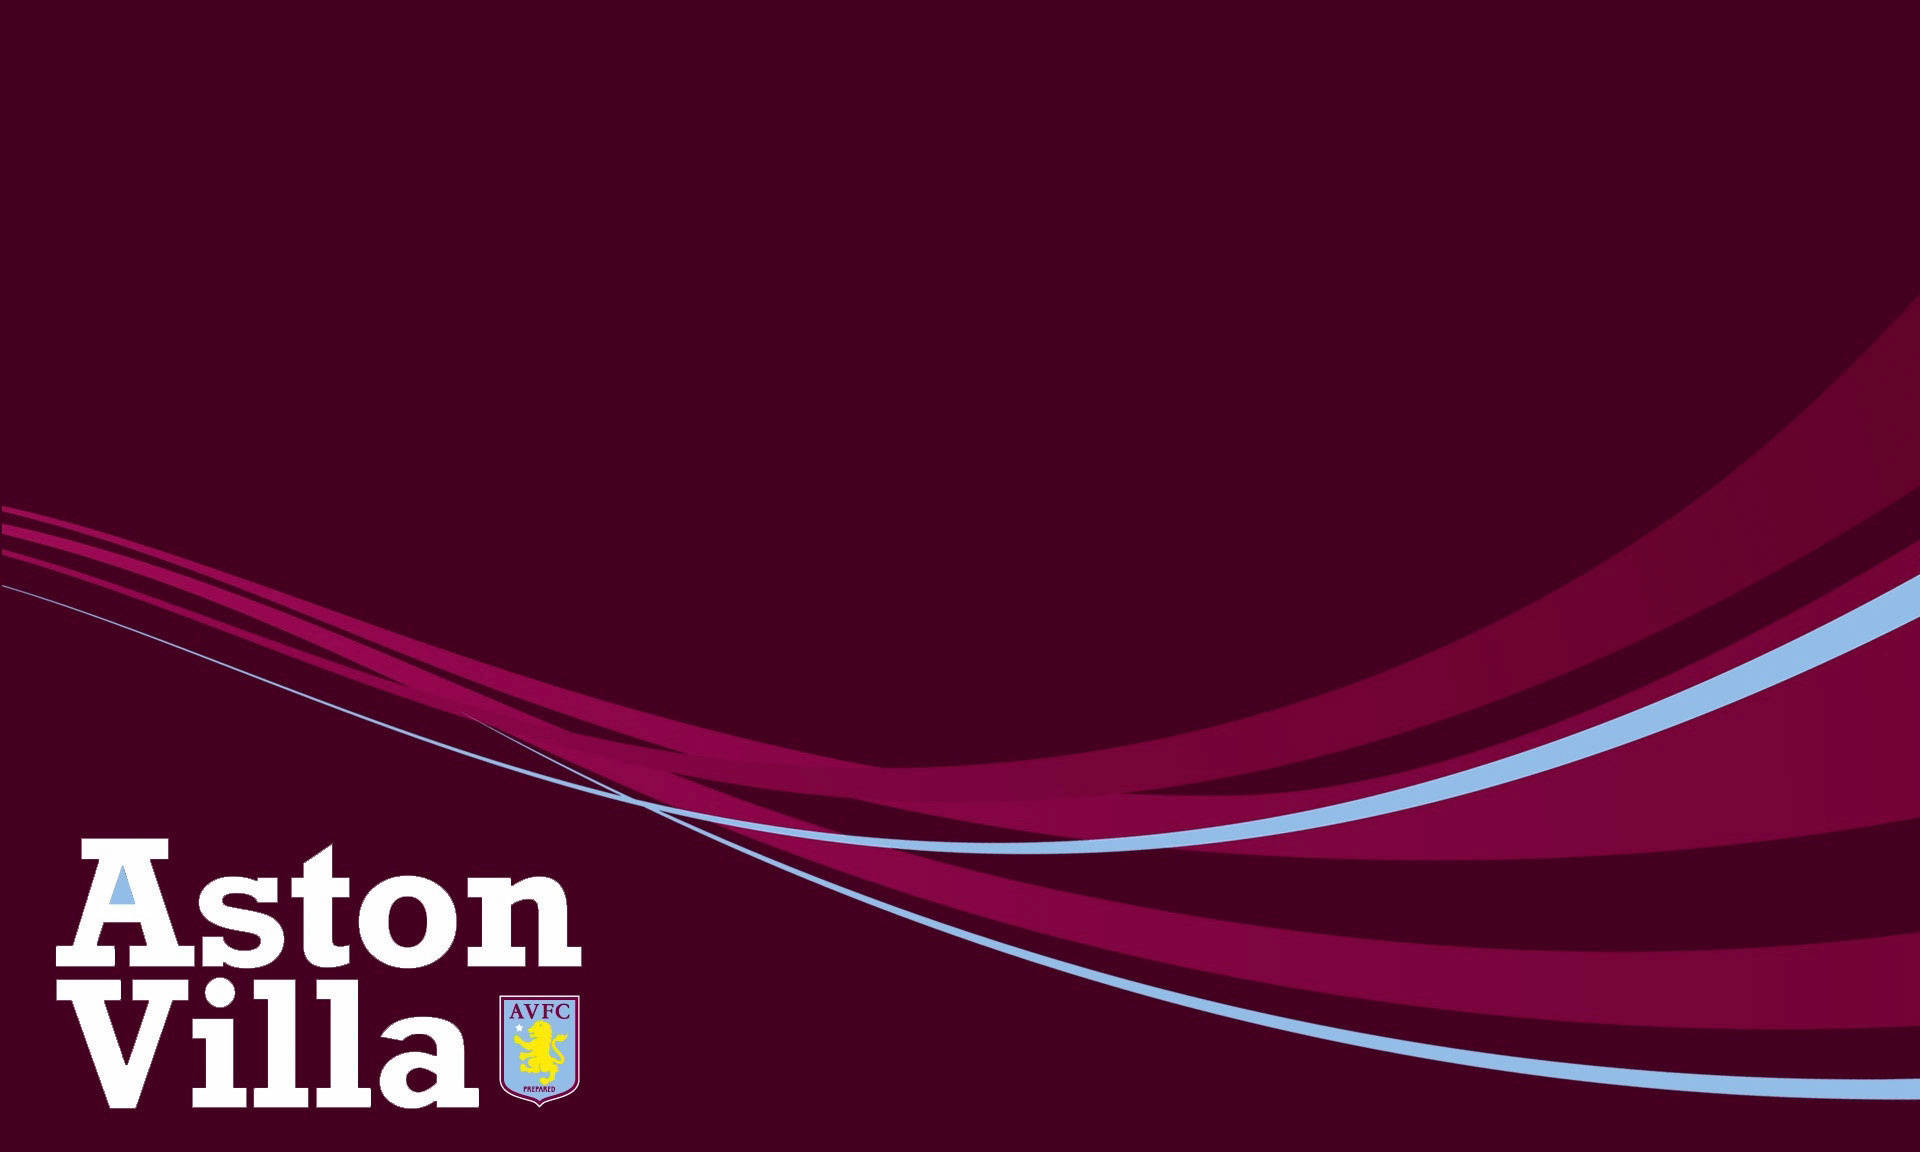 Aston Villa Name Art Background